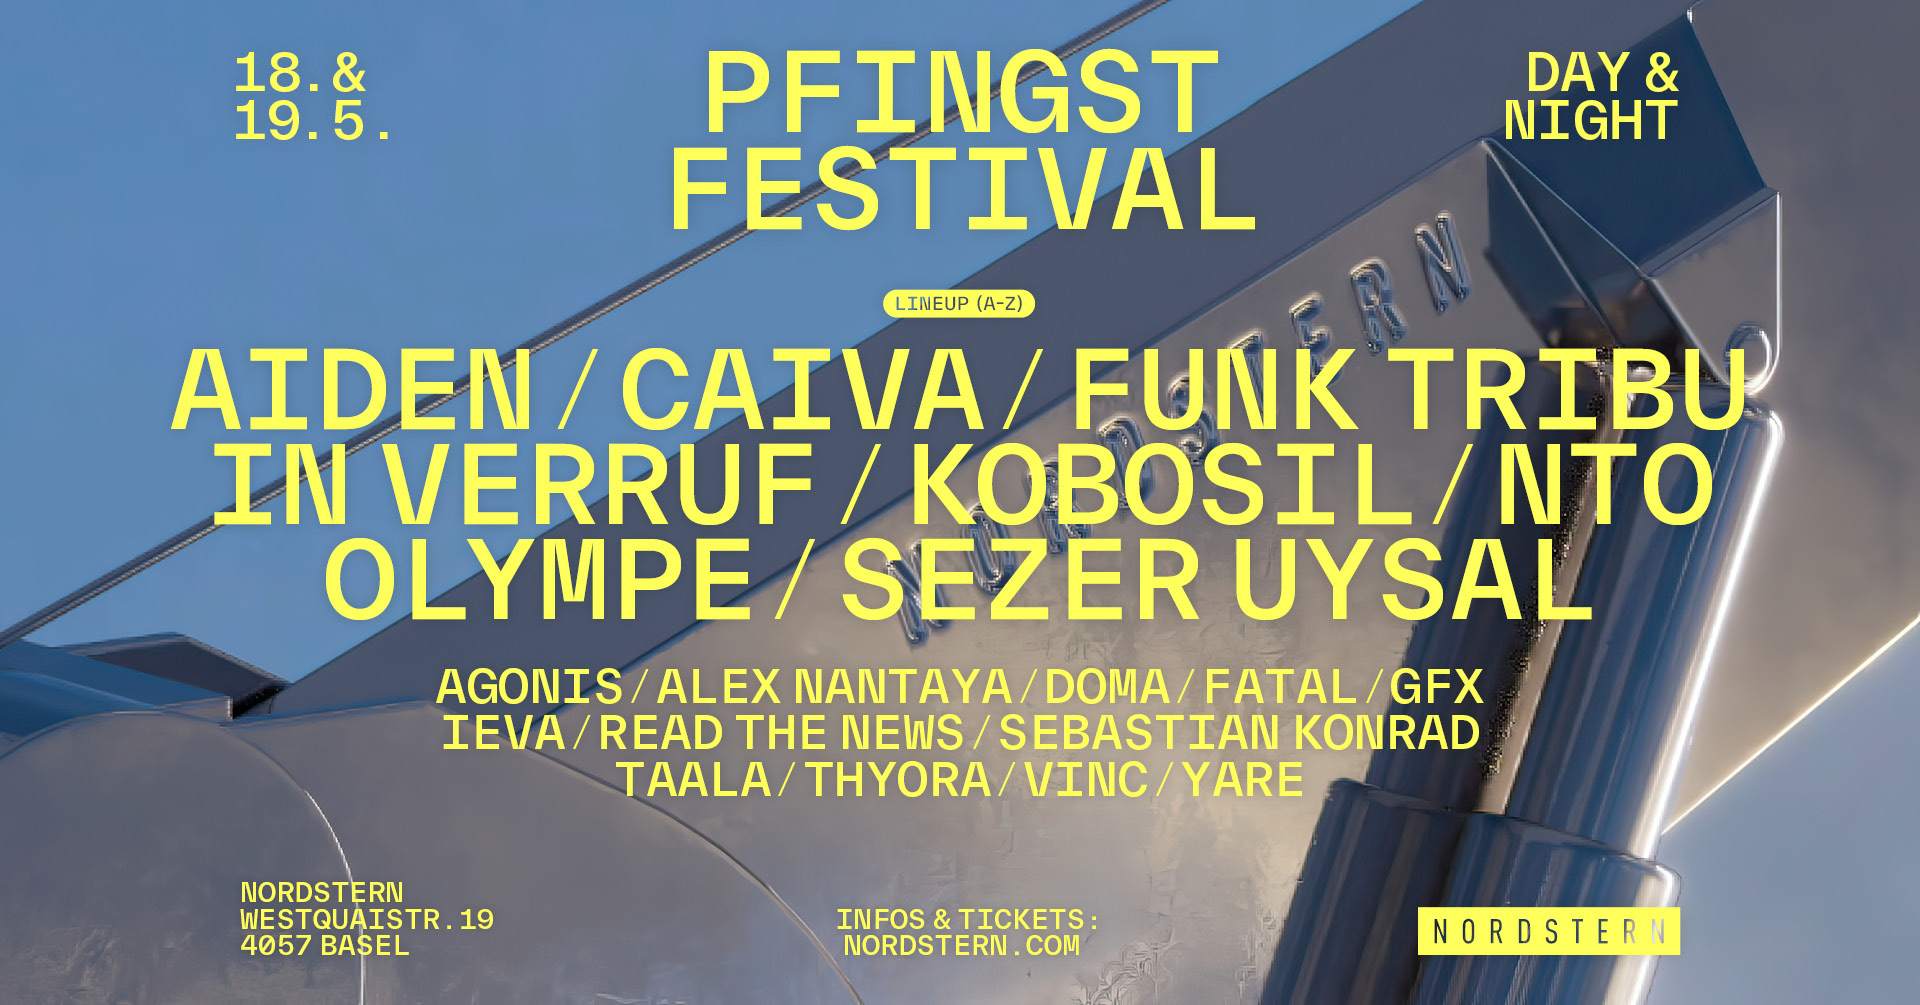 Pfingstfestival by Nordstern - フライヤー表